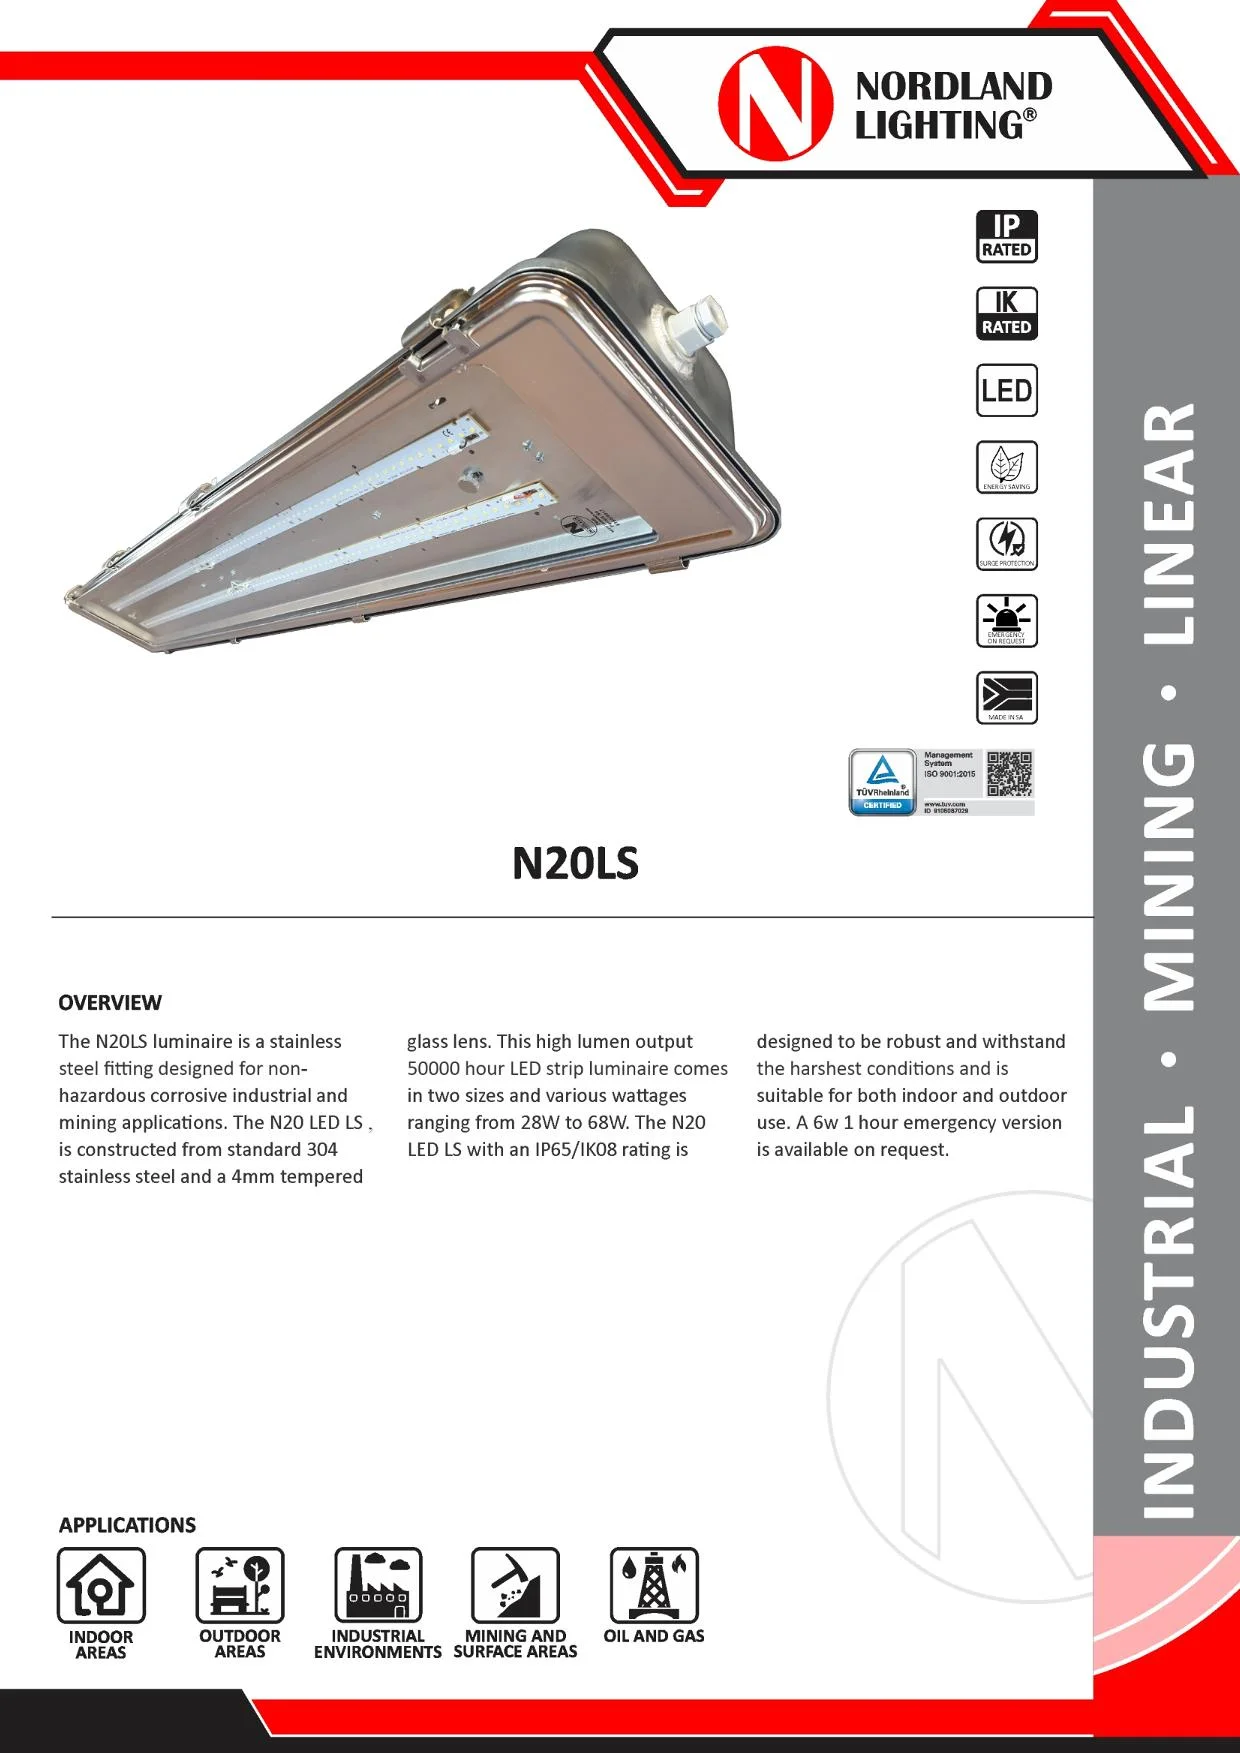 NL44 Nordland N20LS Stainless Steel Luminaire